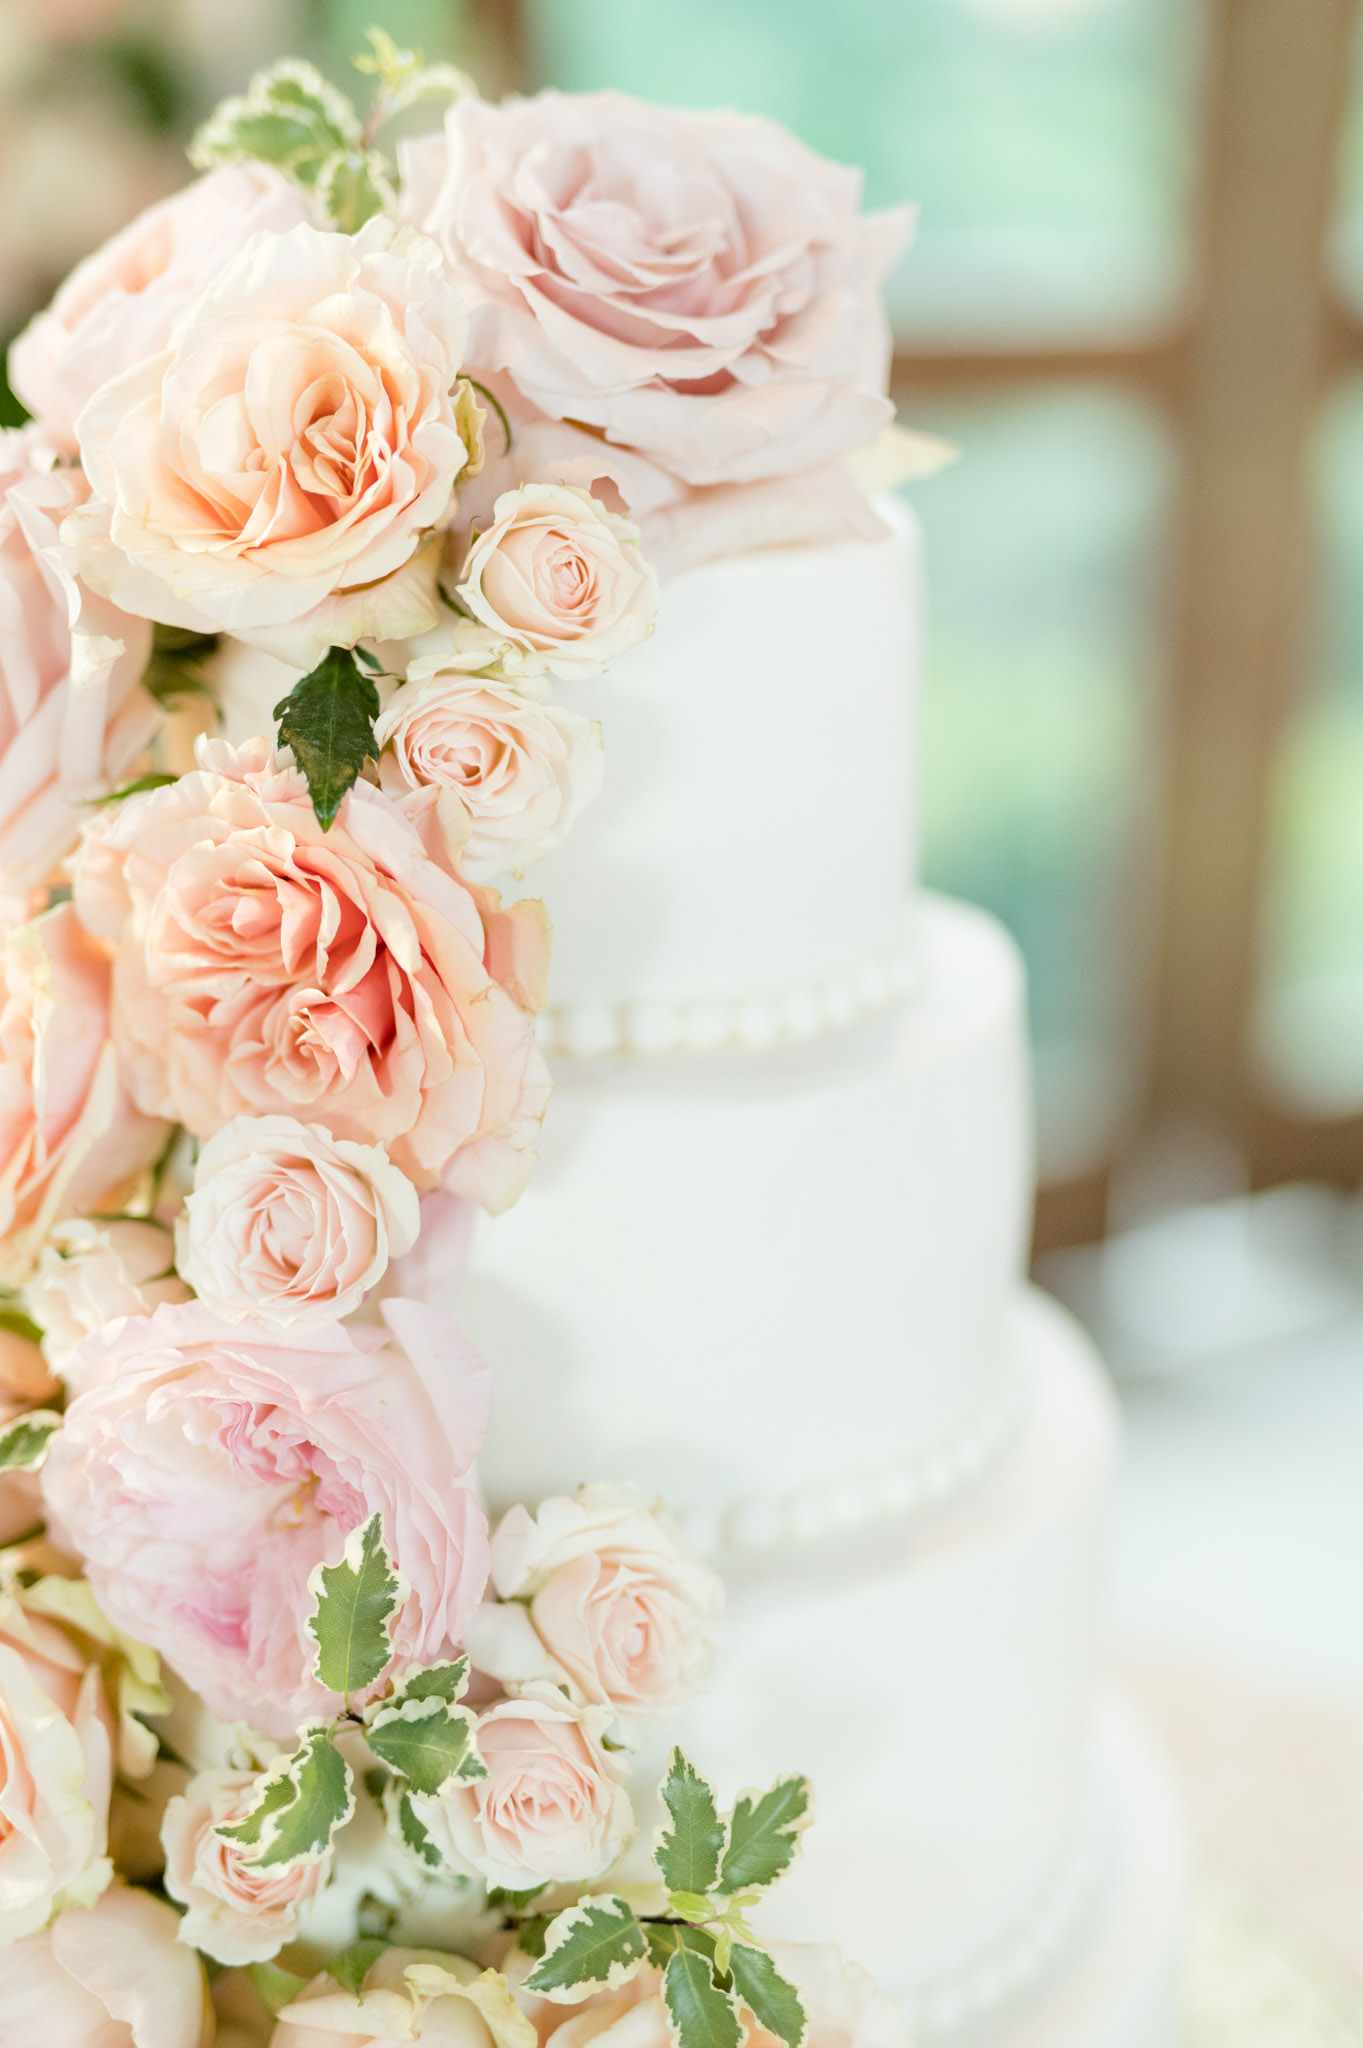 Closeup of flowers on wedding cake.